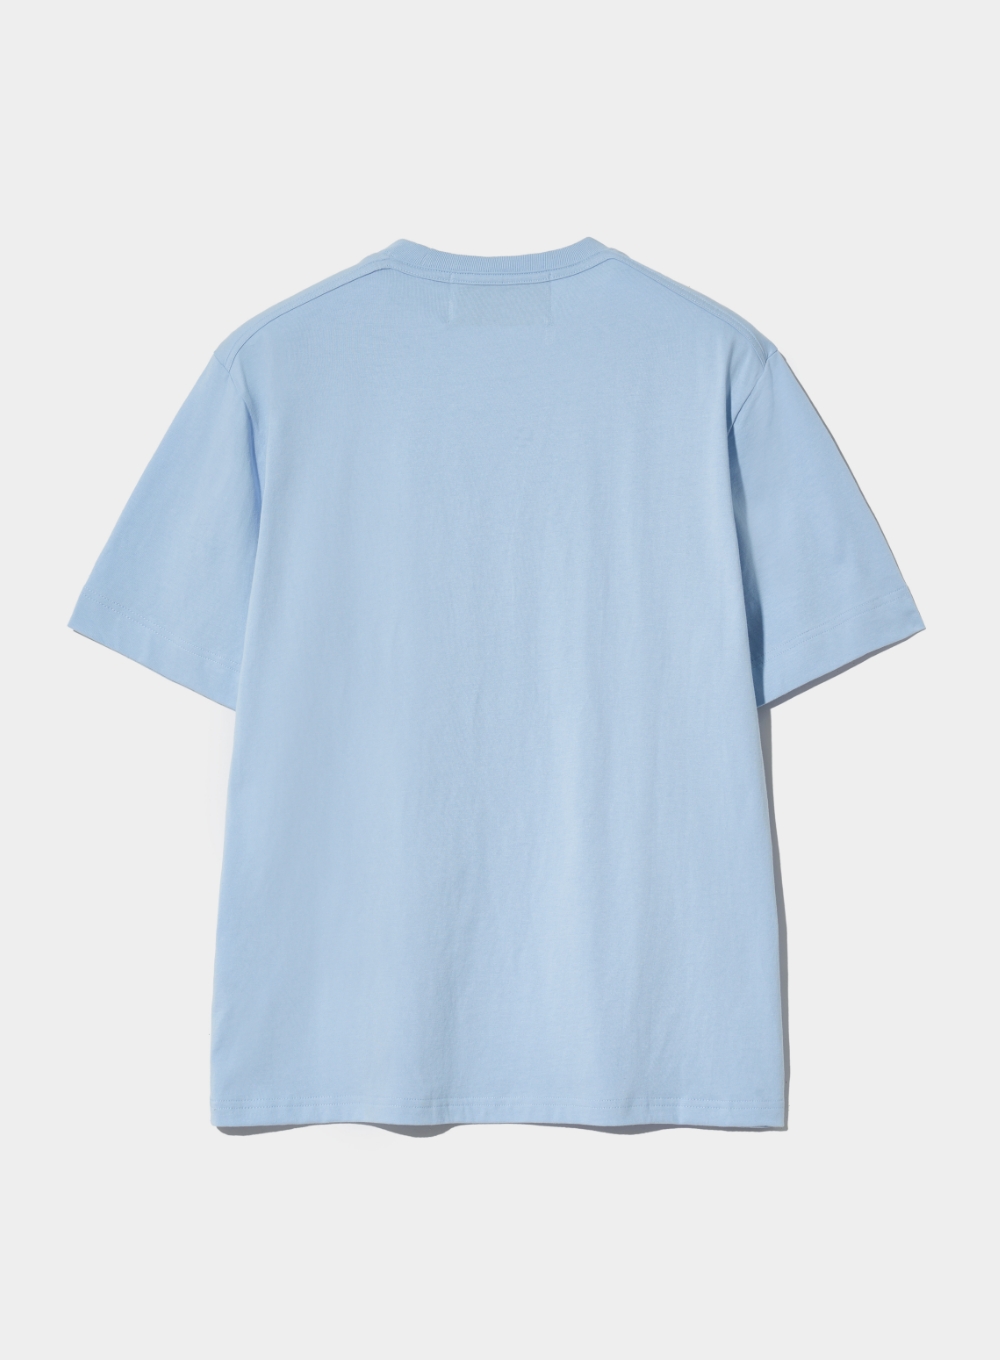 Classy Nostalgia Vintage Graphic T-Shirt - Sky Blue